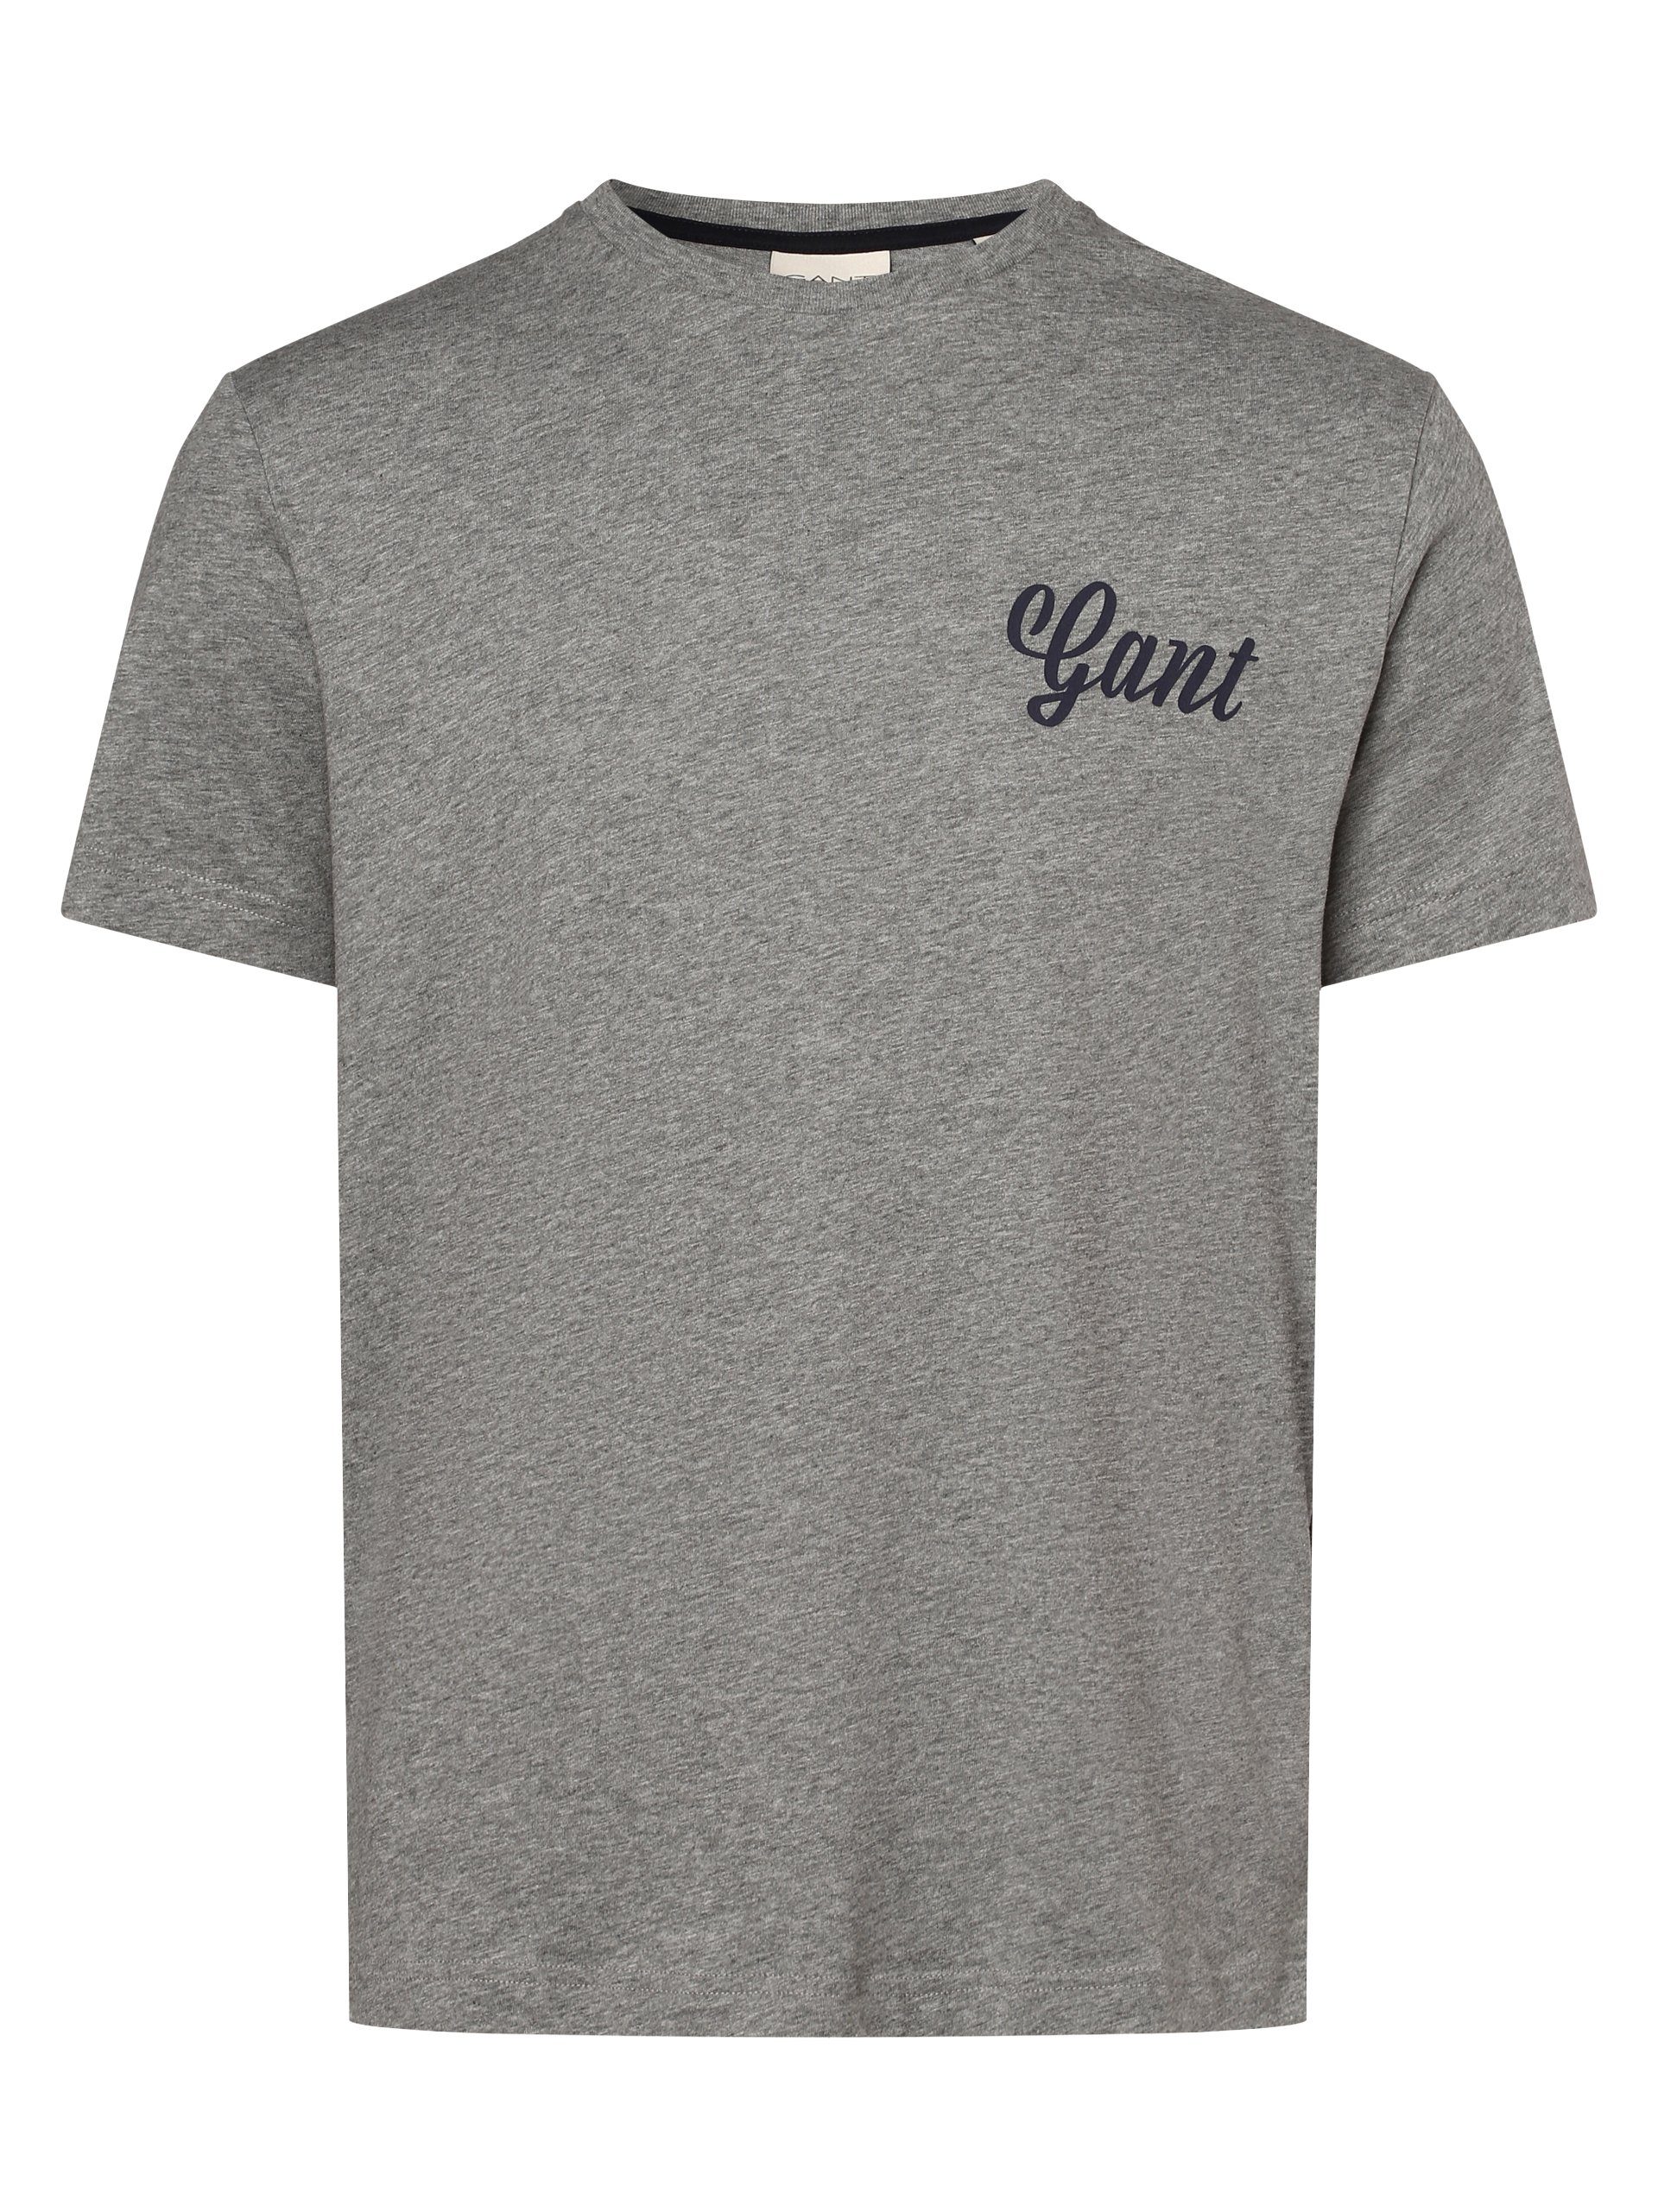 grau T-Shirt Gant